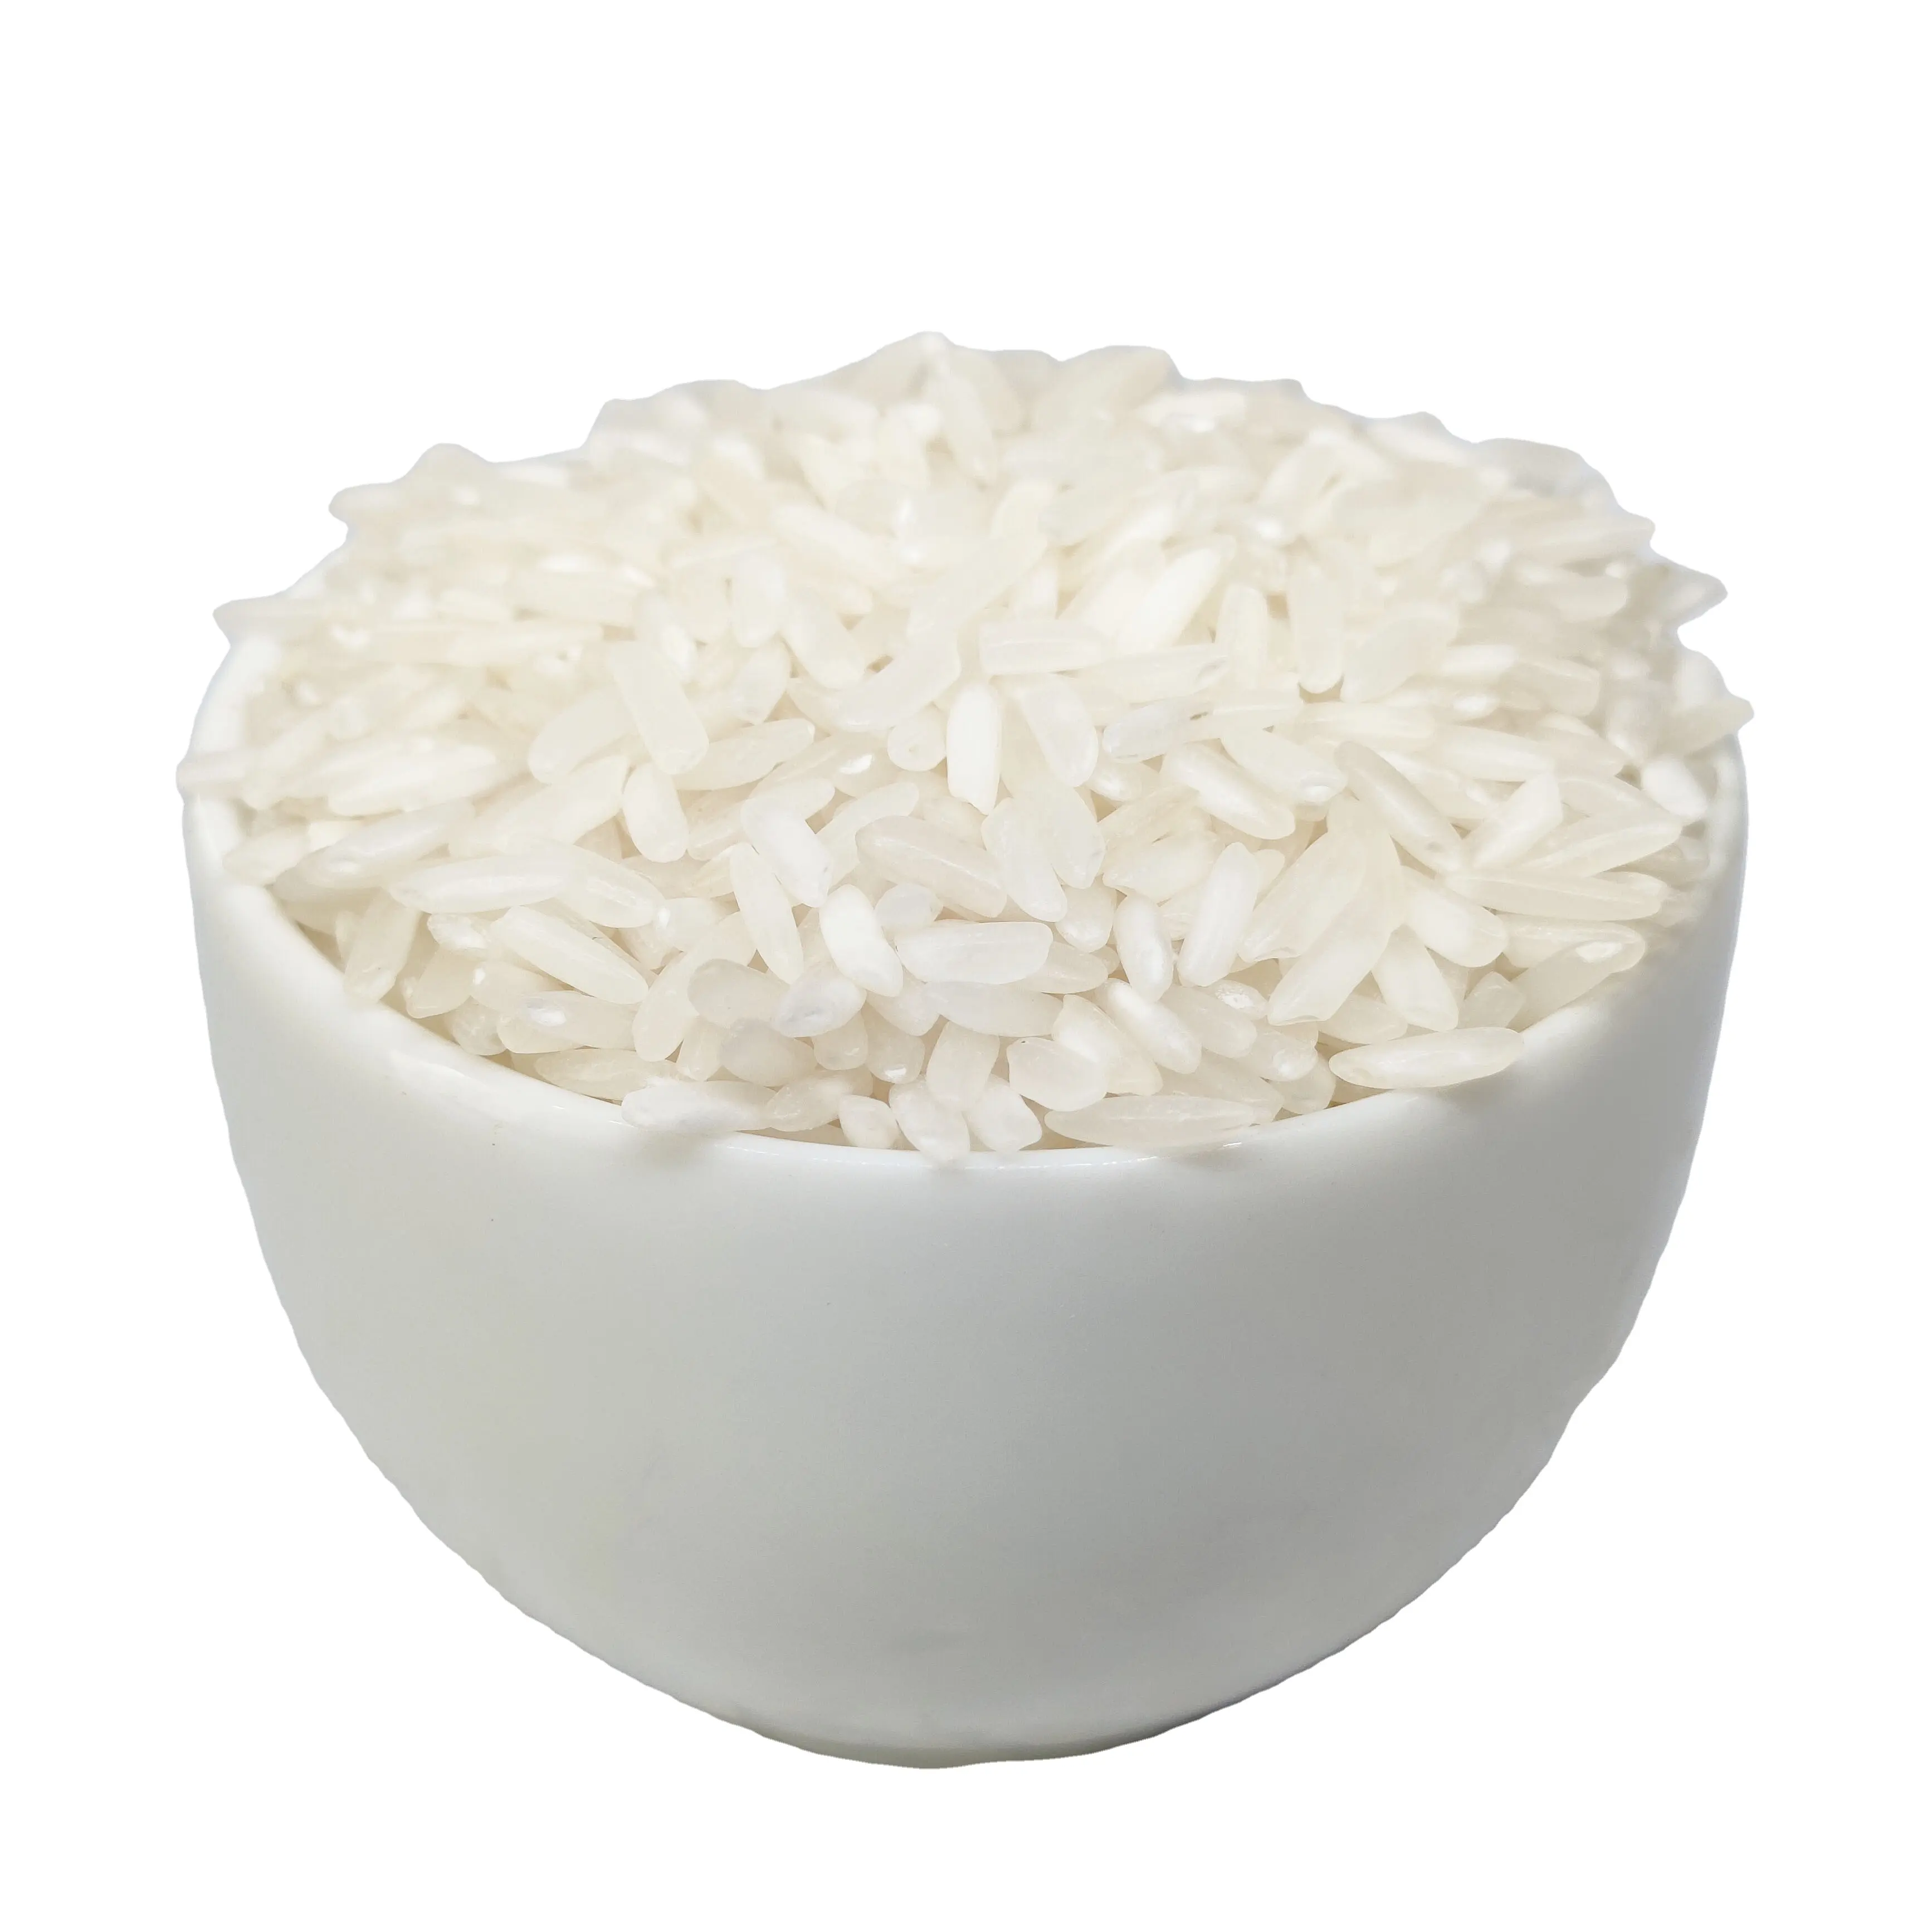 VIETNAM 504 pirinç uzun taneli beyaz pirinç 5% 25% 40% 100% kırık, satış için ucuz pirinç